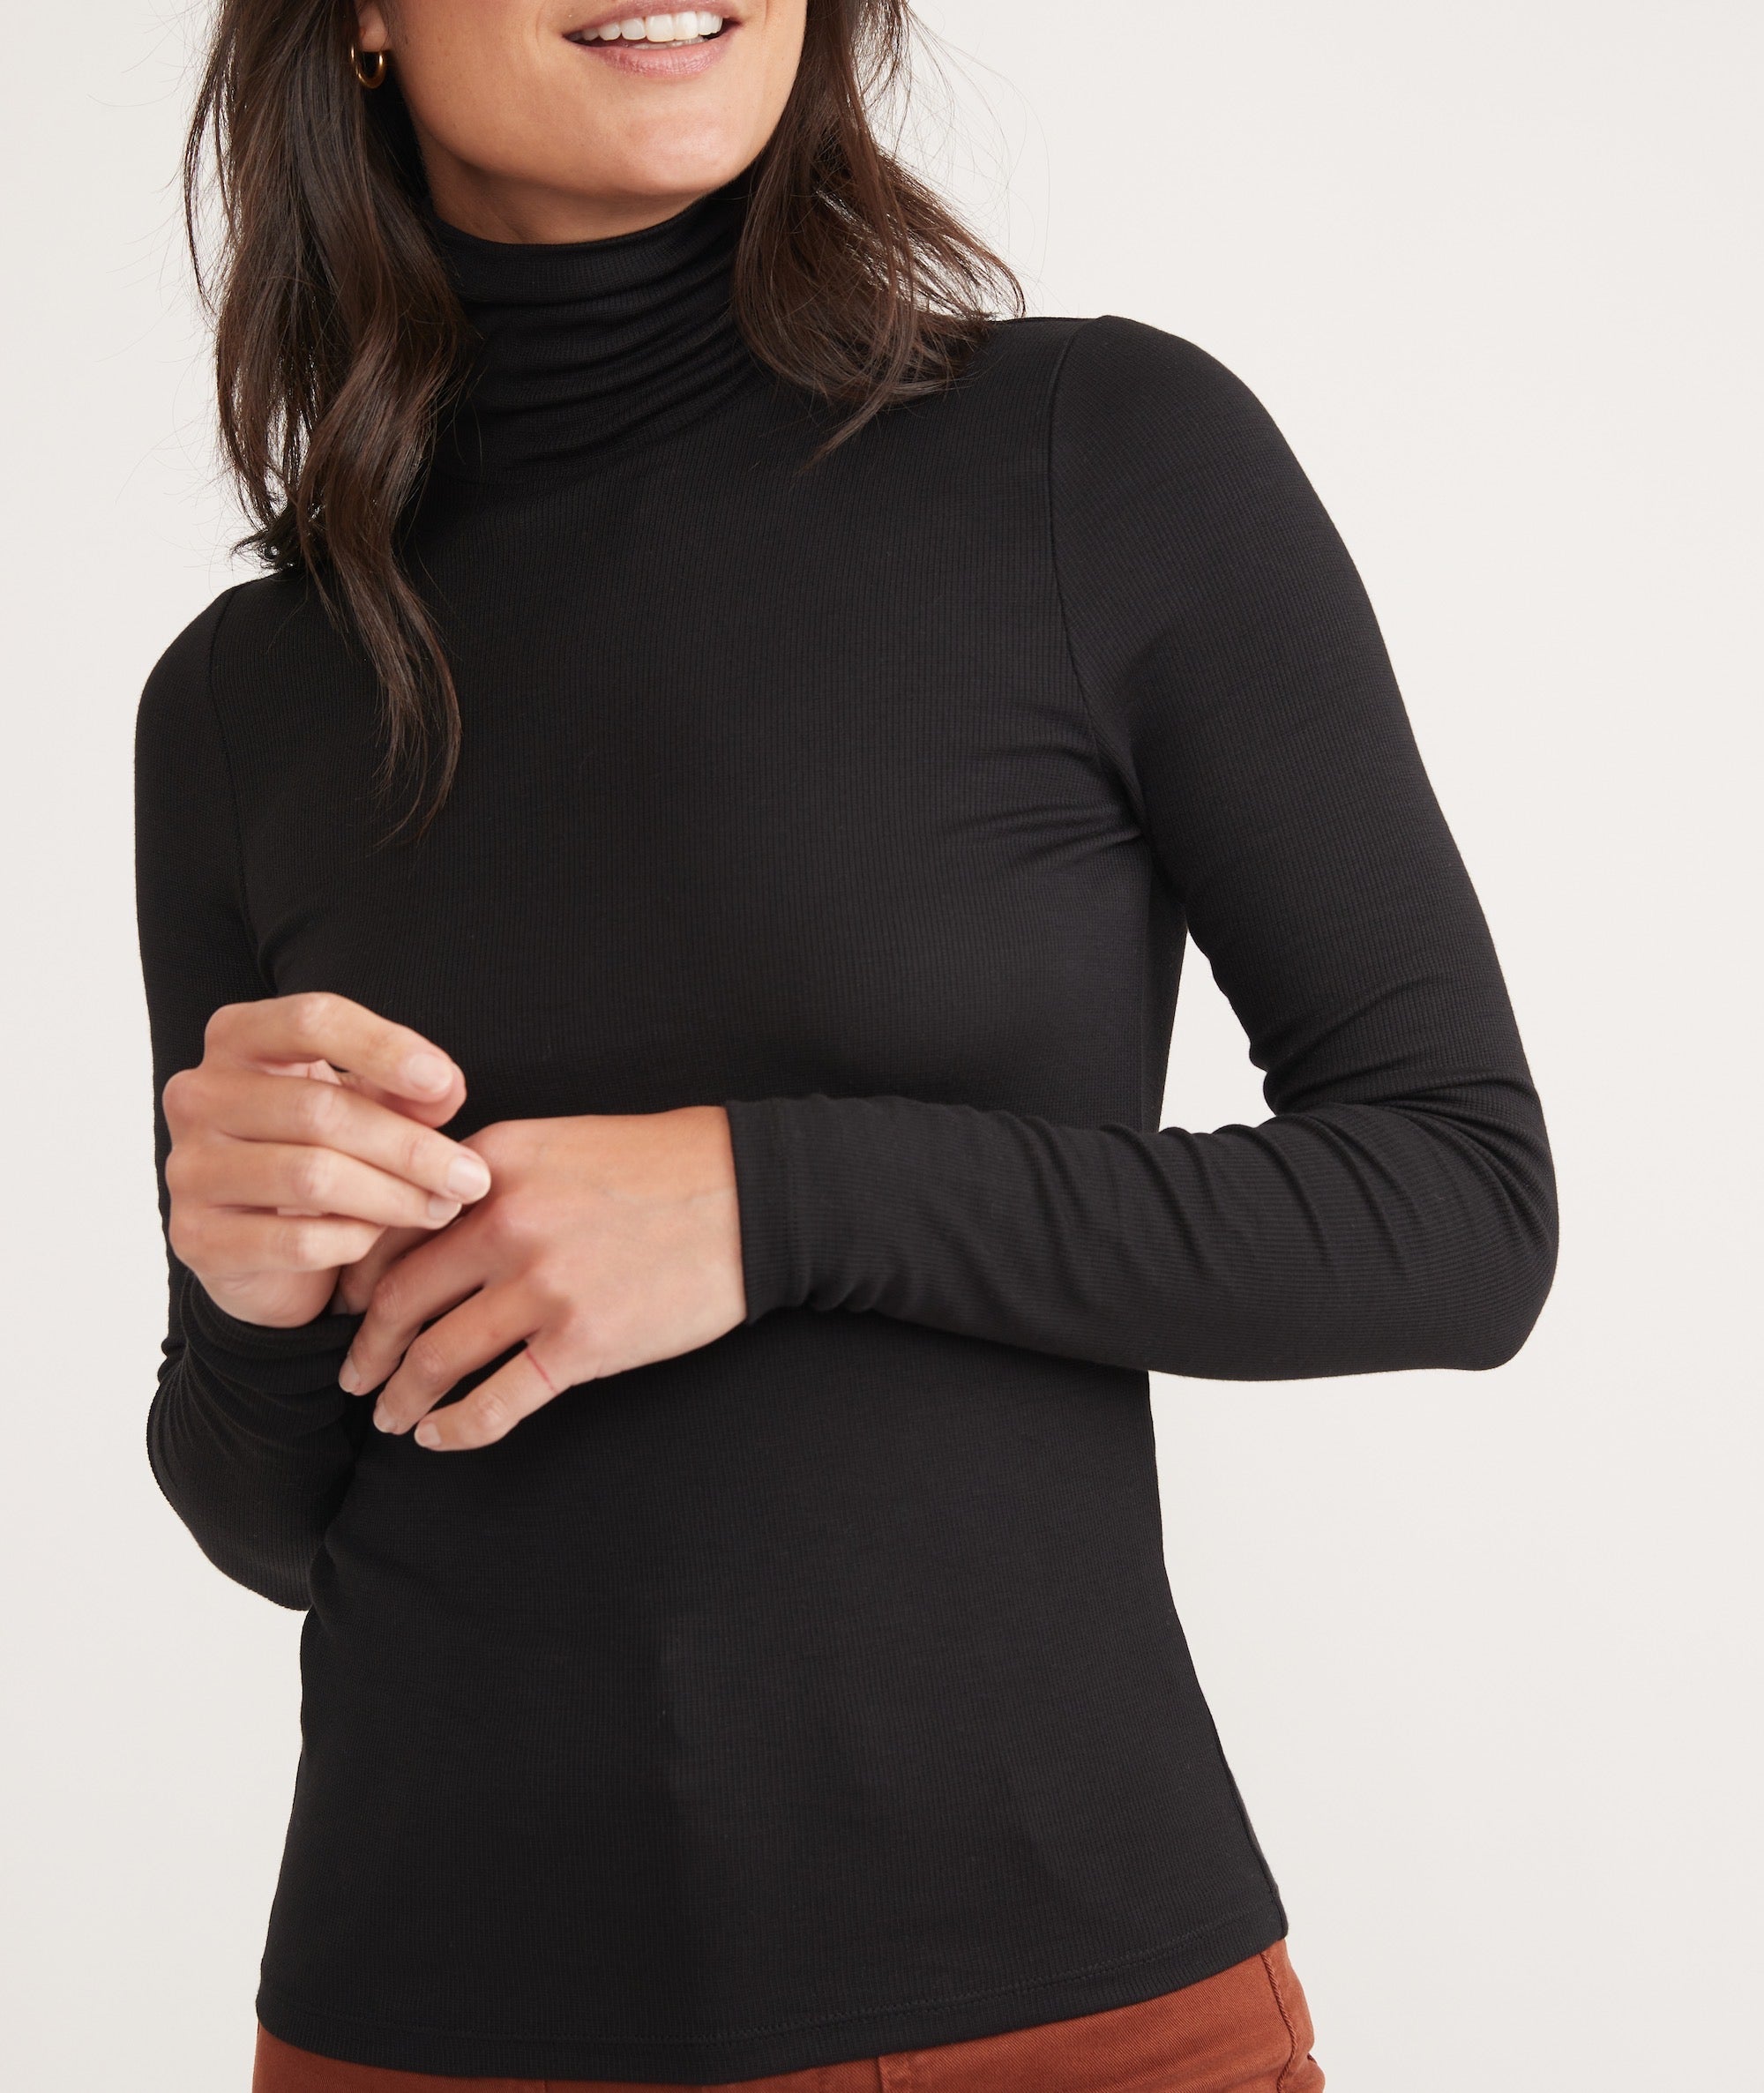 Women's Plus Size Long Sleeve Turtleneck Top Black X-Large at